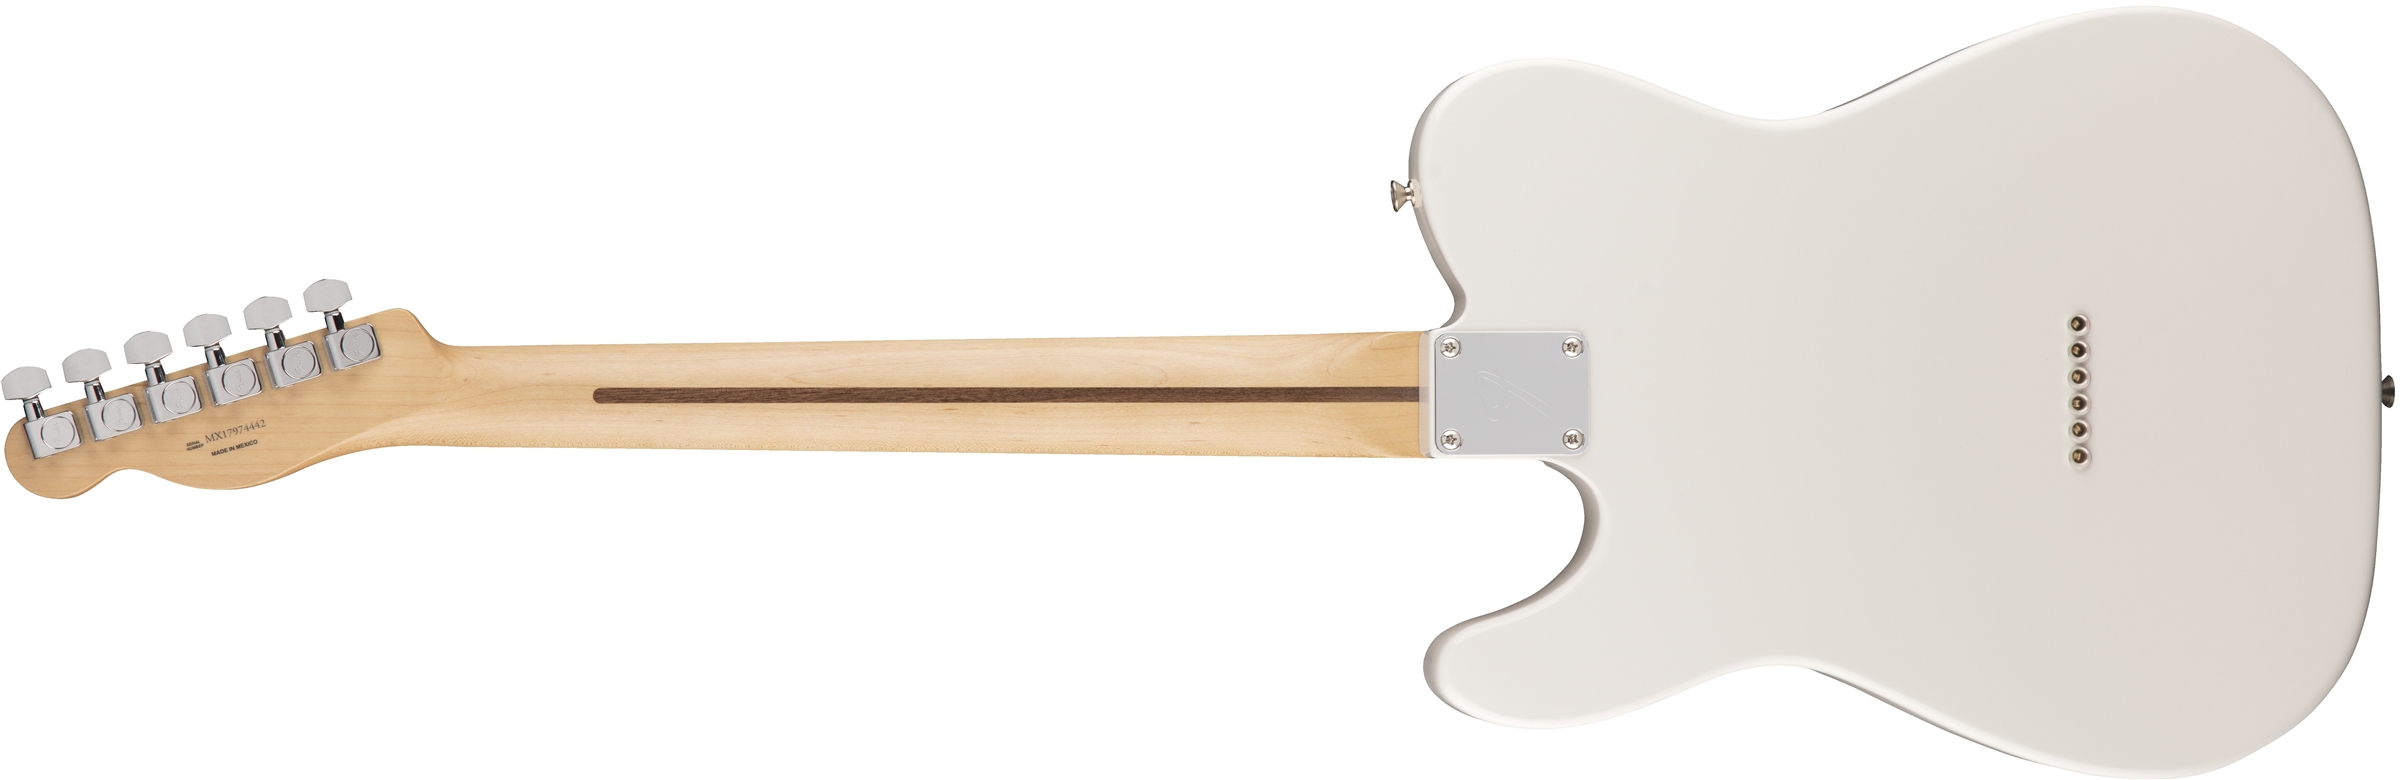 Fender Tele Player Mex Ss Pf - Polar White - Tel shape electric guitar - Variation 1